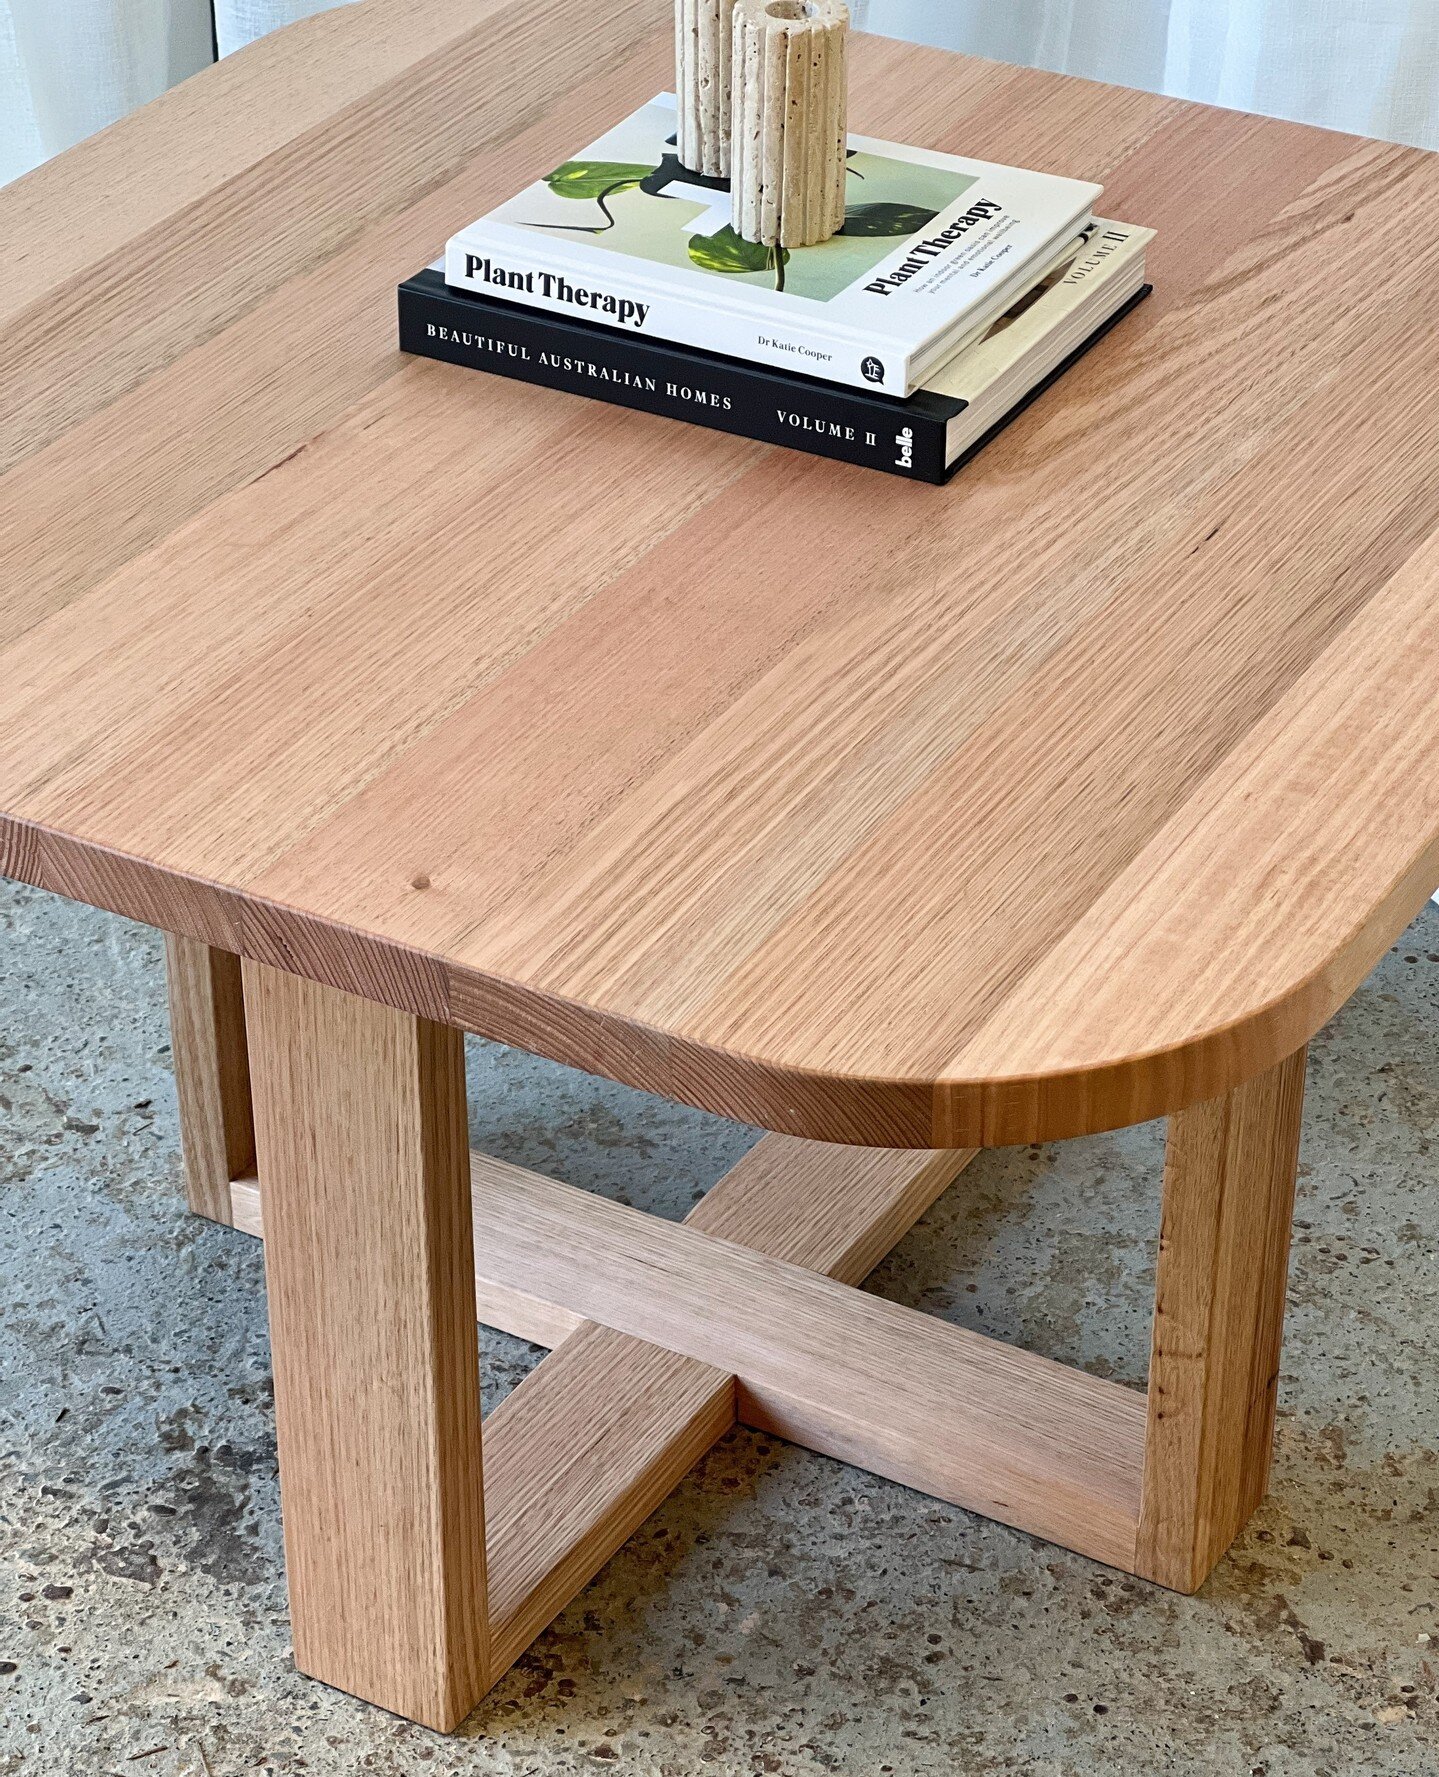 This Tasmanian Oak coffee table is beautifully curvy and elegant